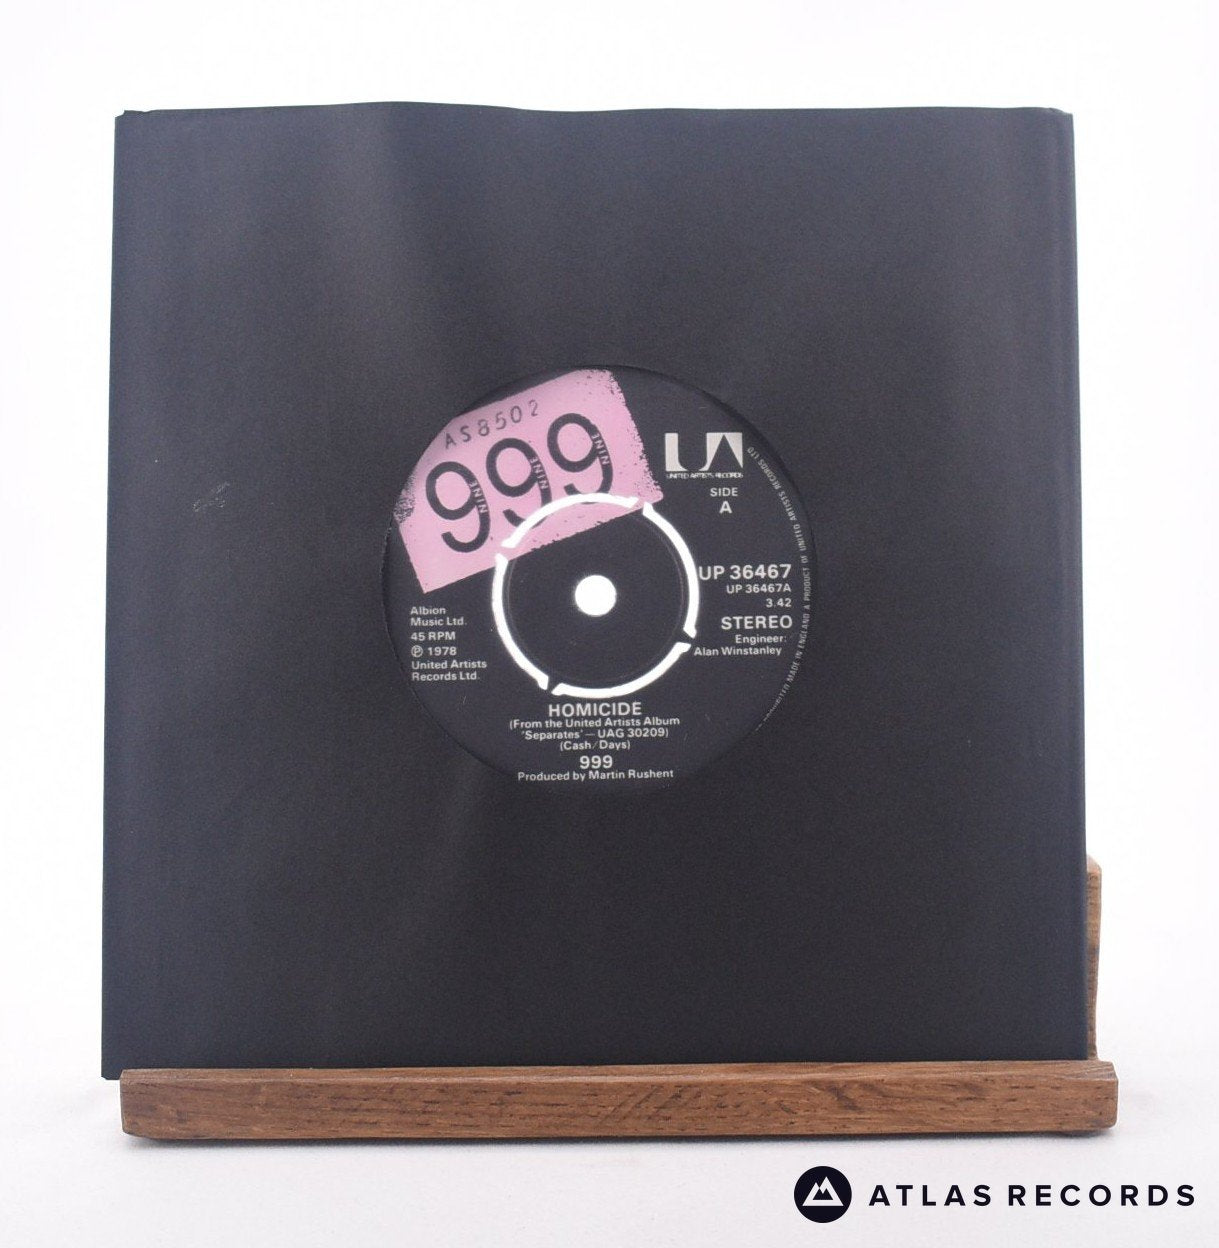 999 Homicide 7" Vinyl Record - In Sleeve